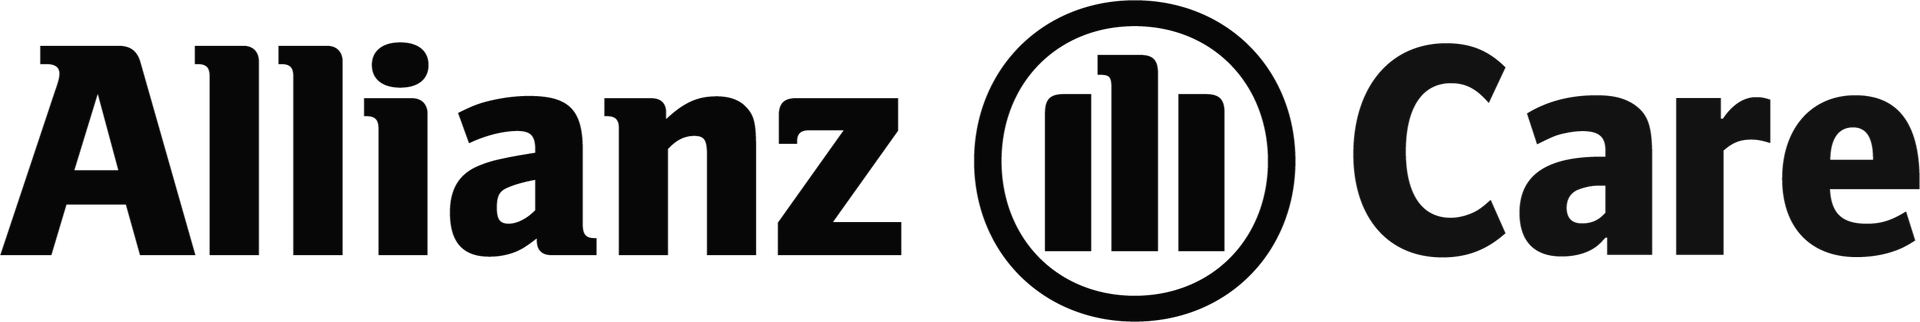 A black and white logo for allianz care